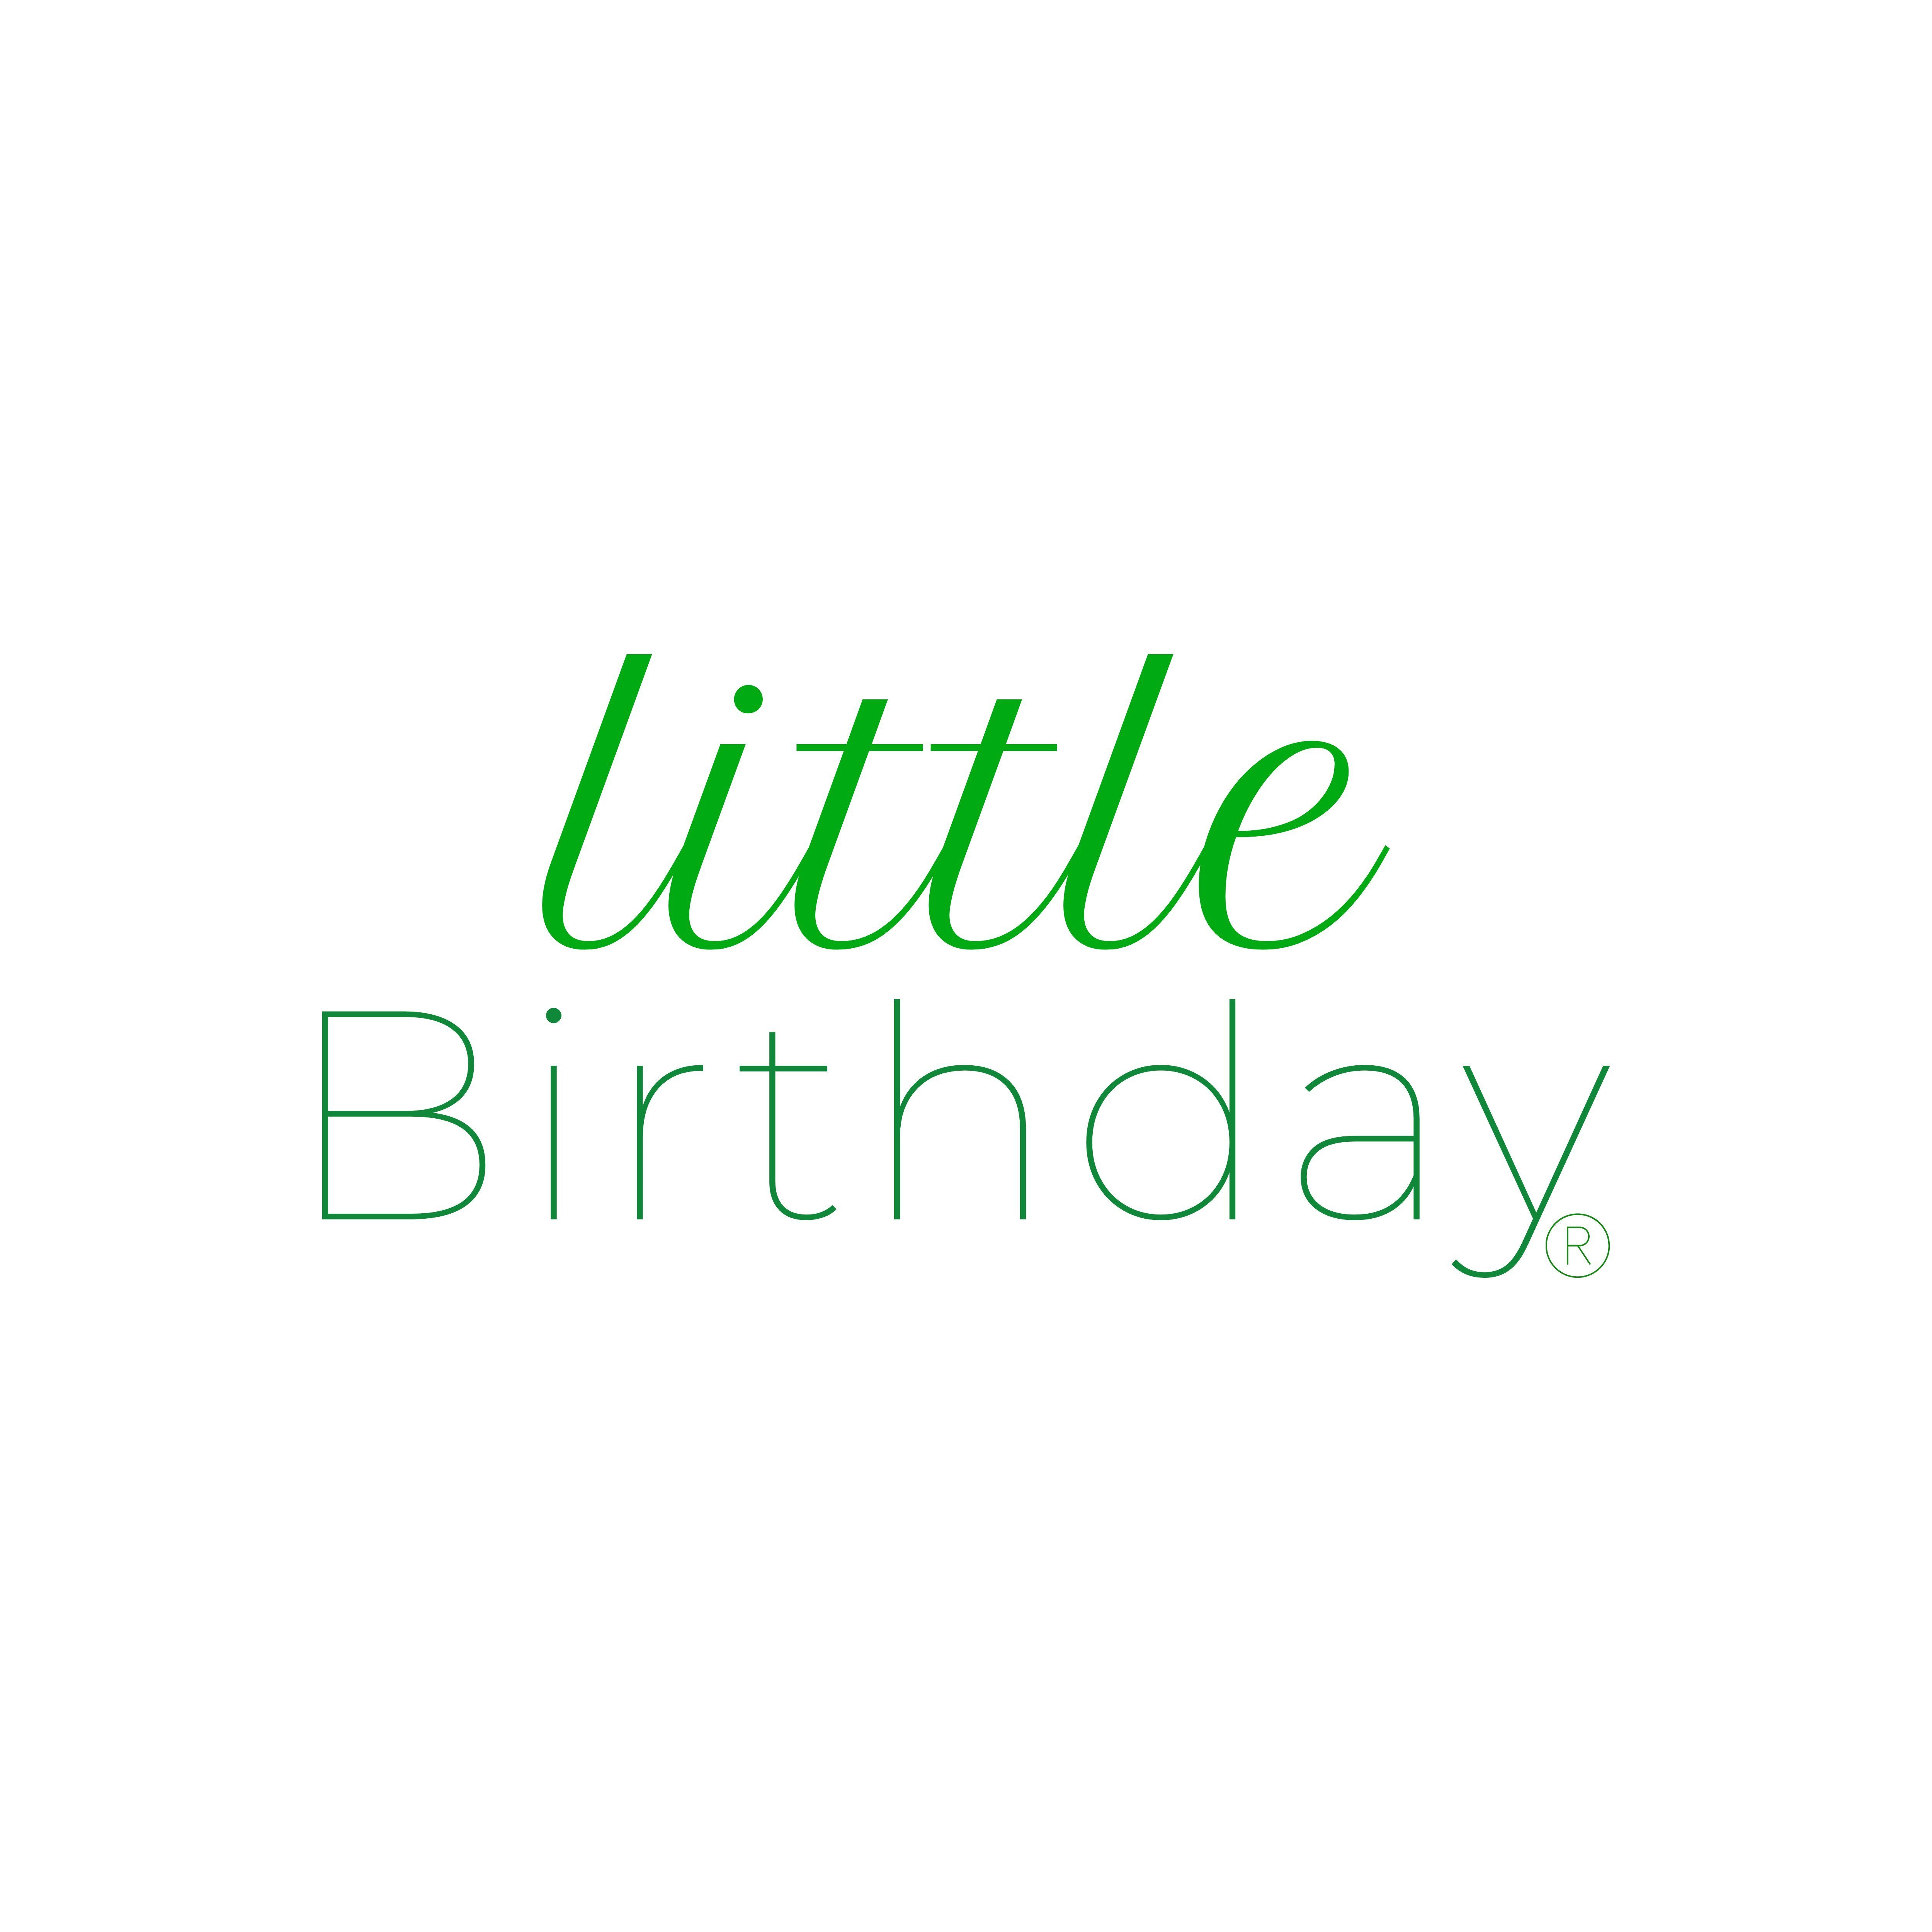 little Birthday